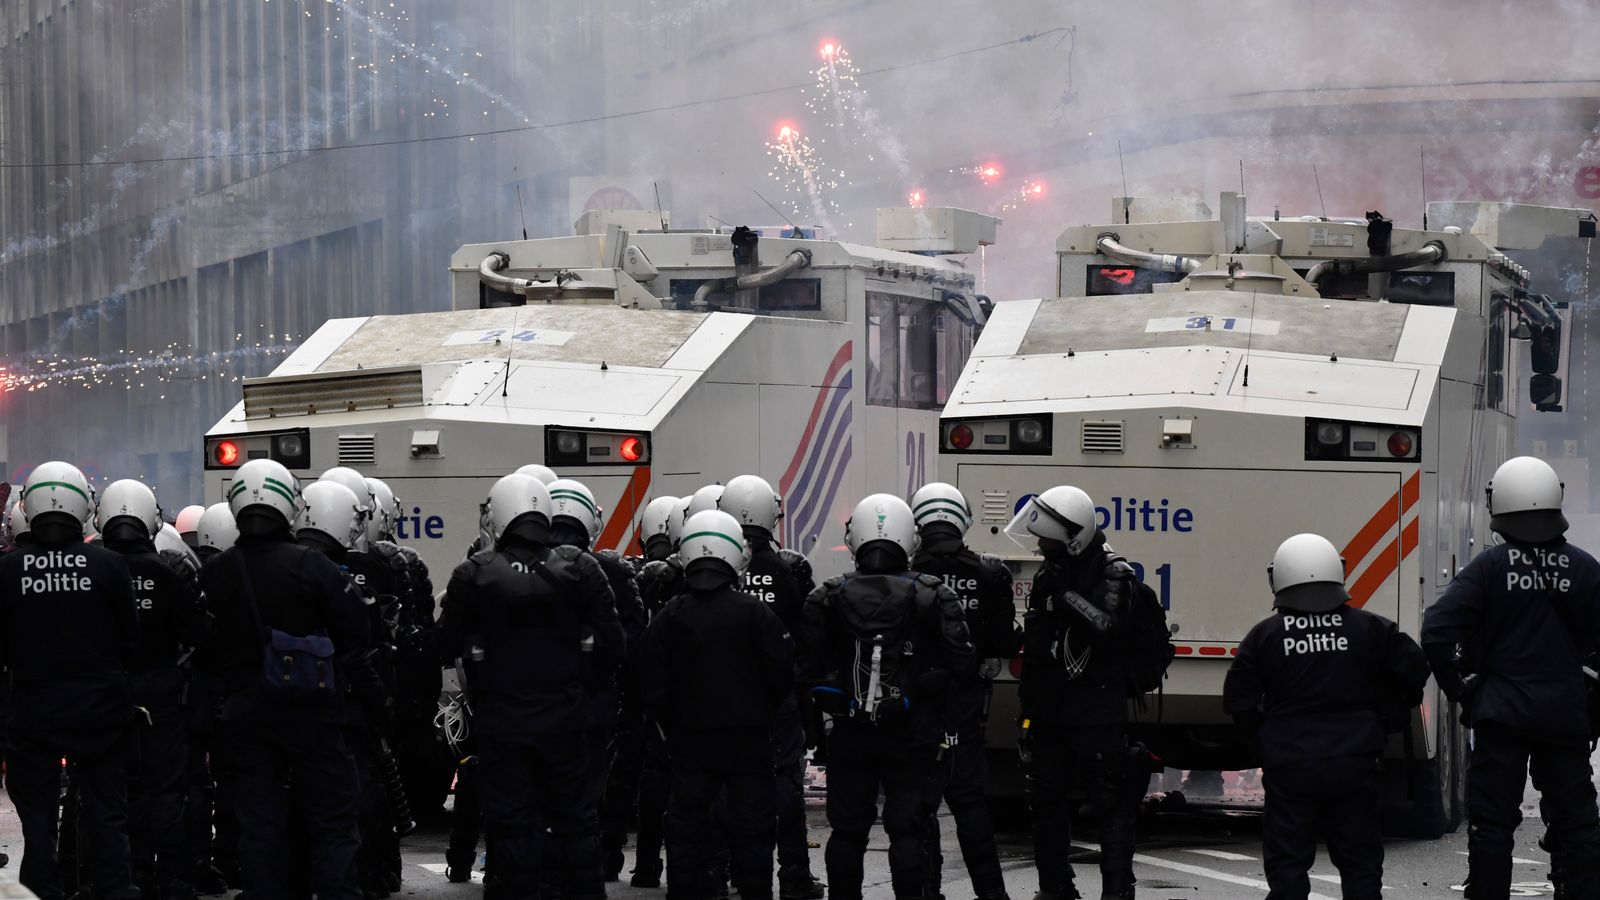 COVID-19: Polisi anti huru hara mengerahkan meriam air dan gas air mata terhadap pengunjuk rasa anti-lockdown di Brussels |  Berita Dunia